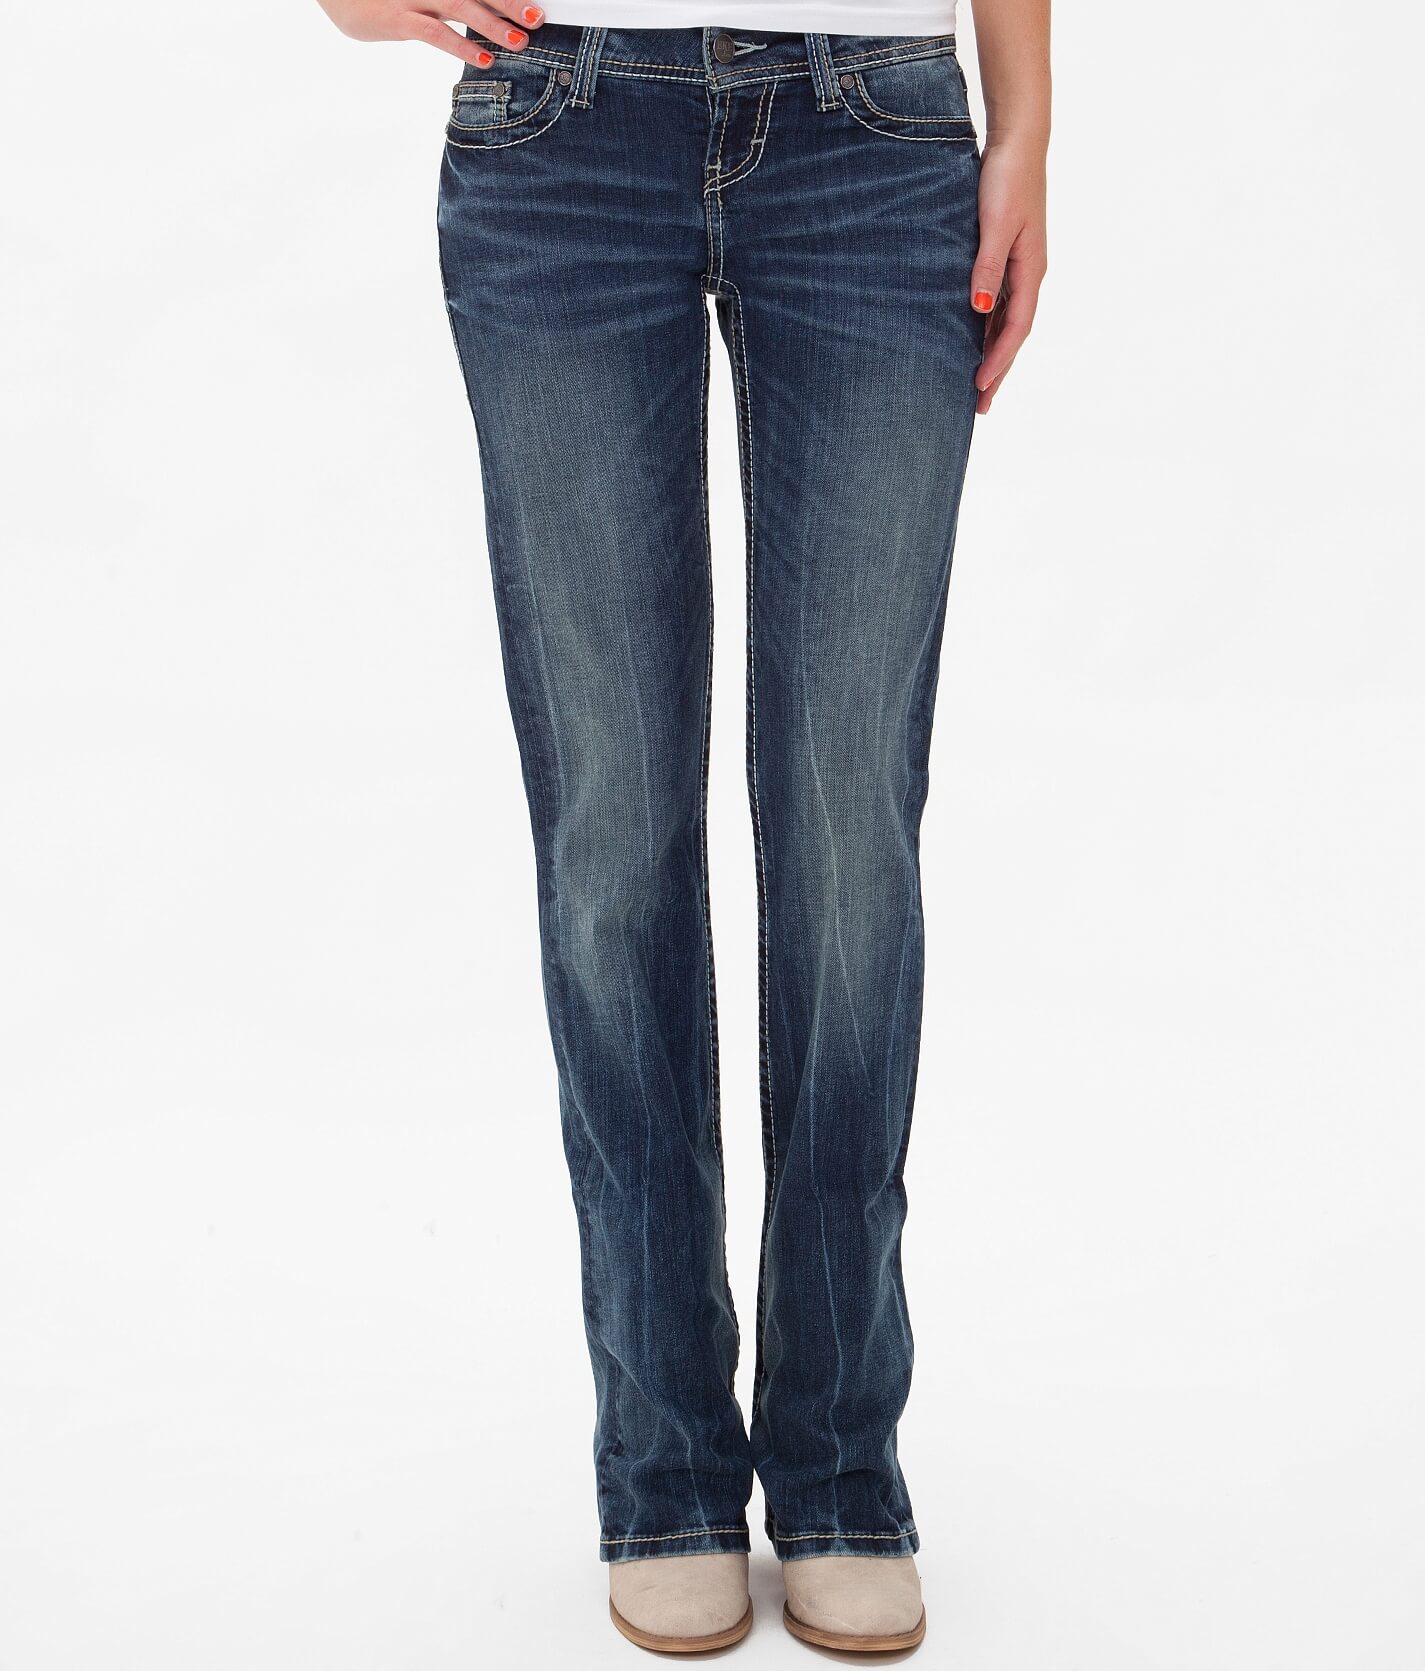 buckle sabrina jeans